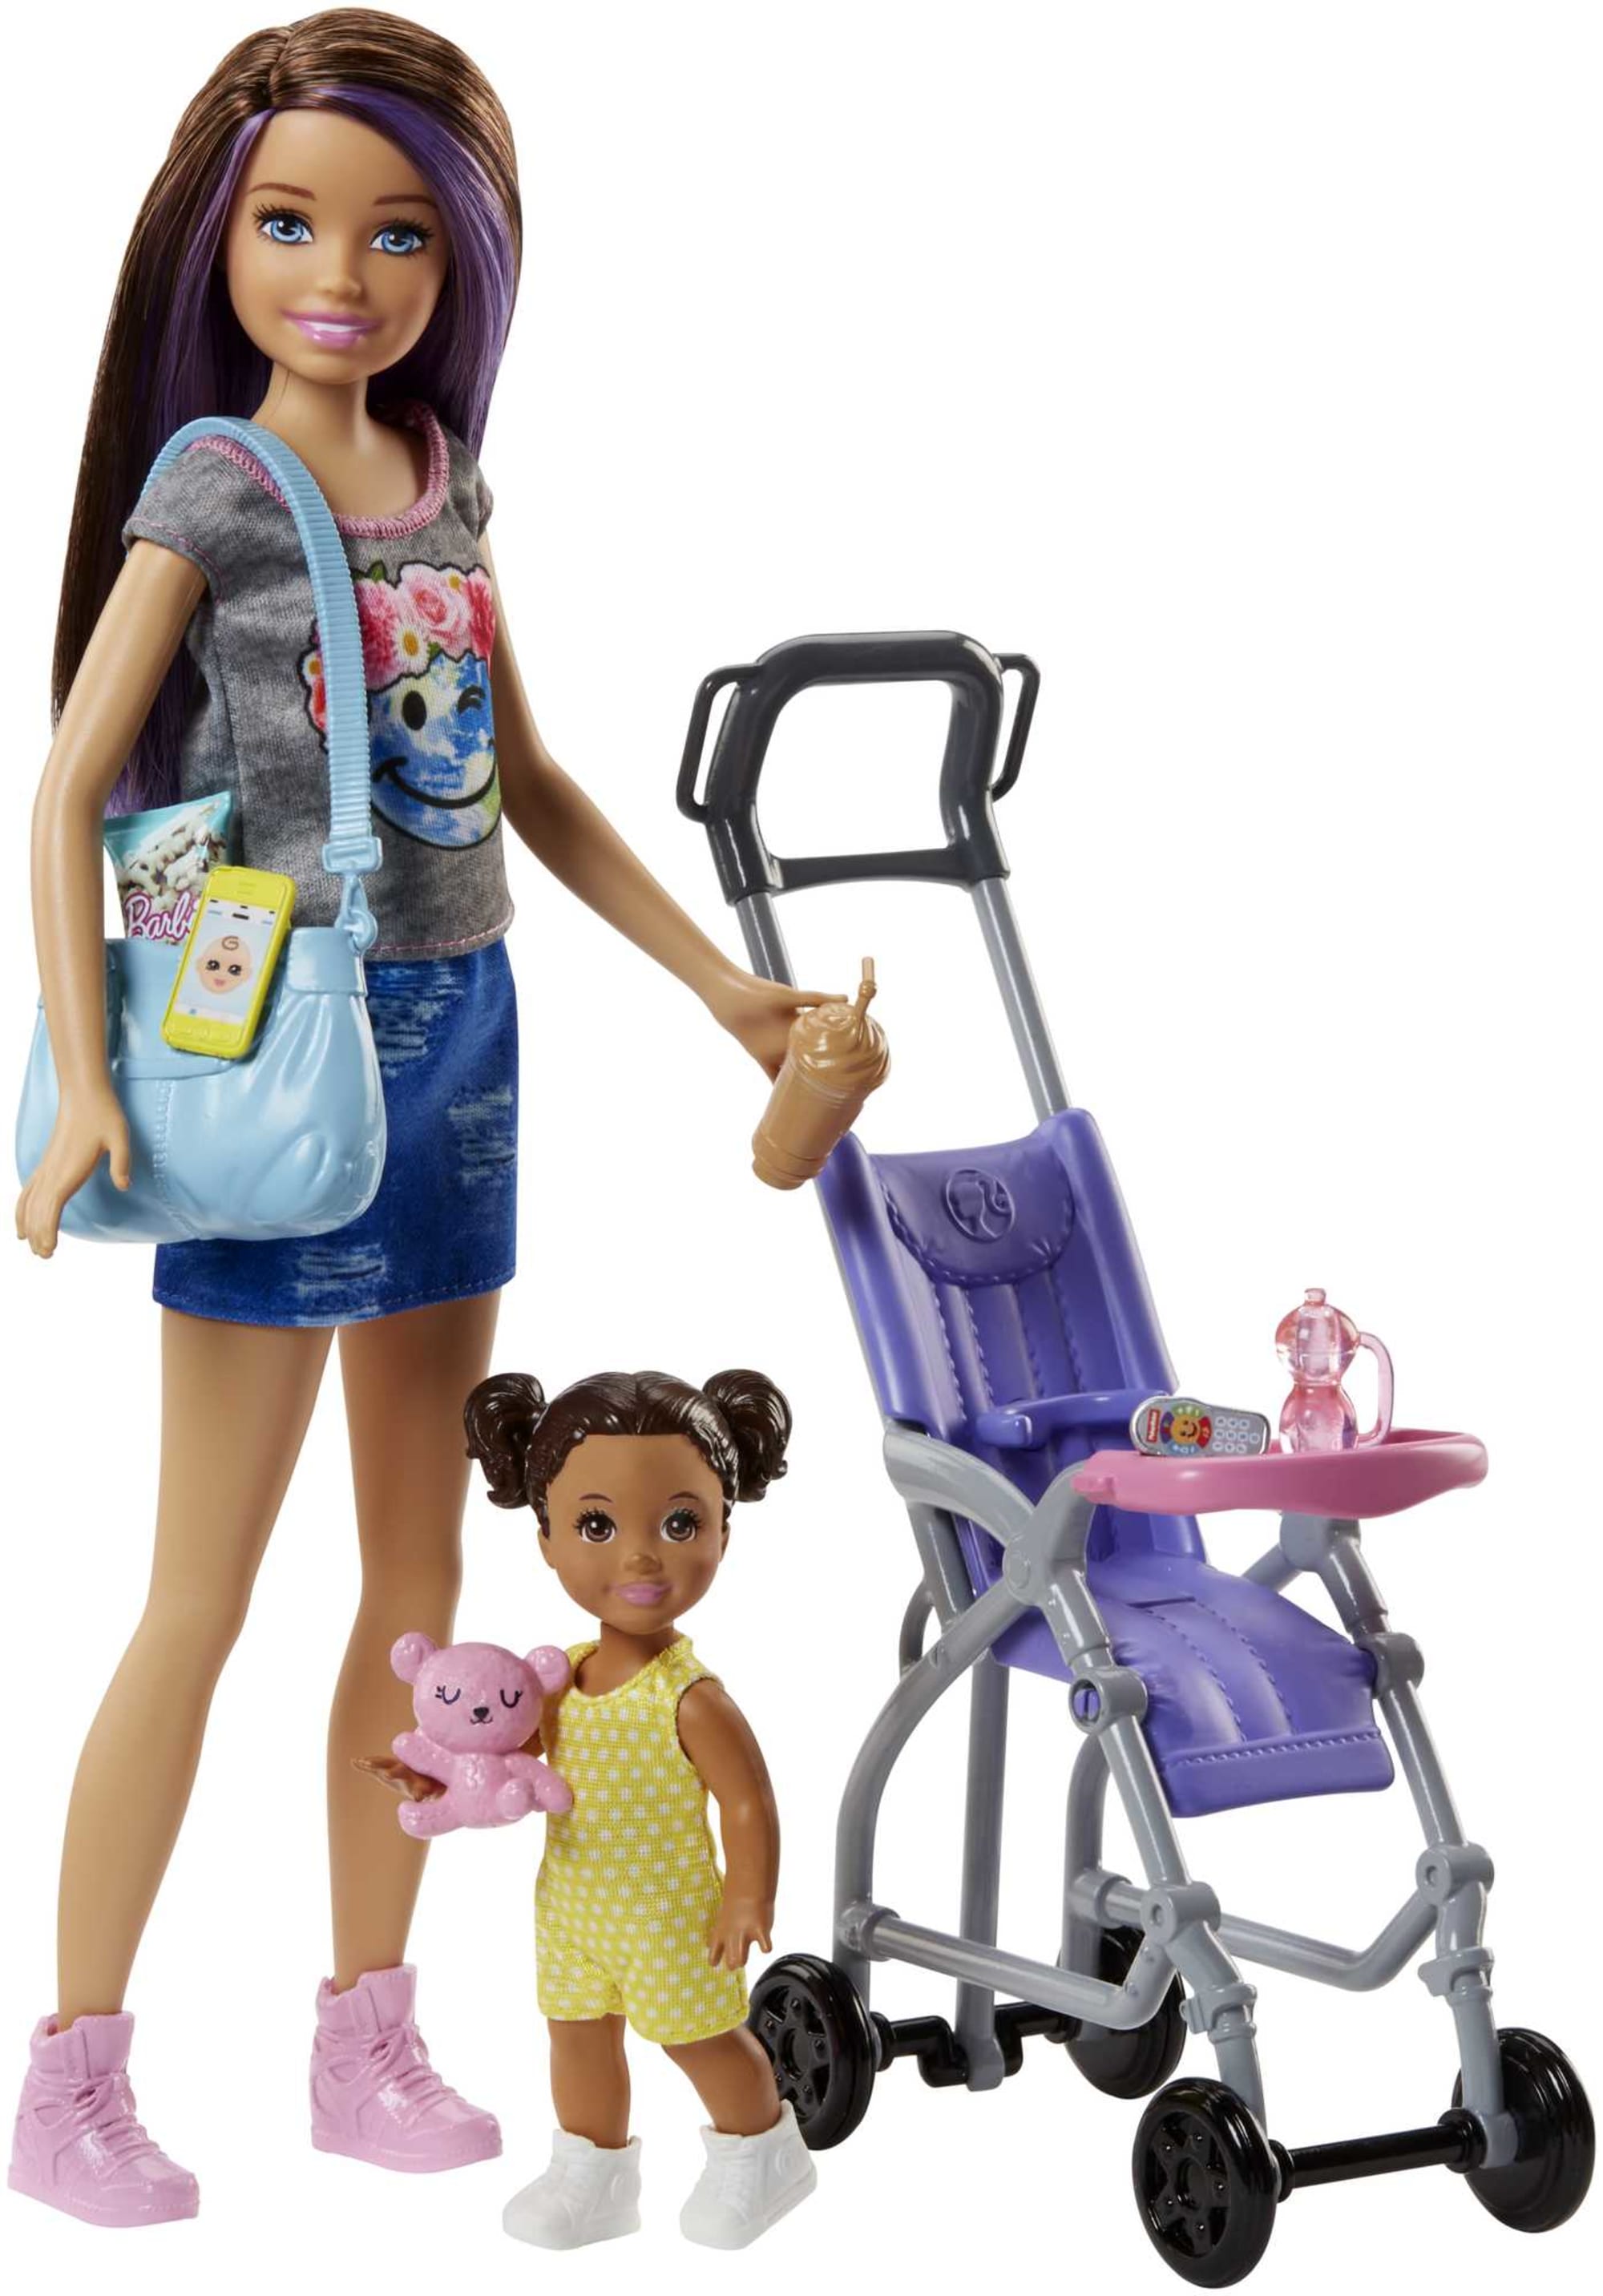 Barbie Skipper Babysitters Inc. Doll and Accessory | MATTEL